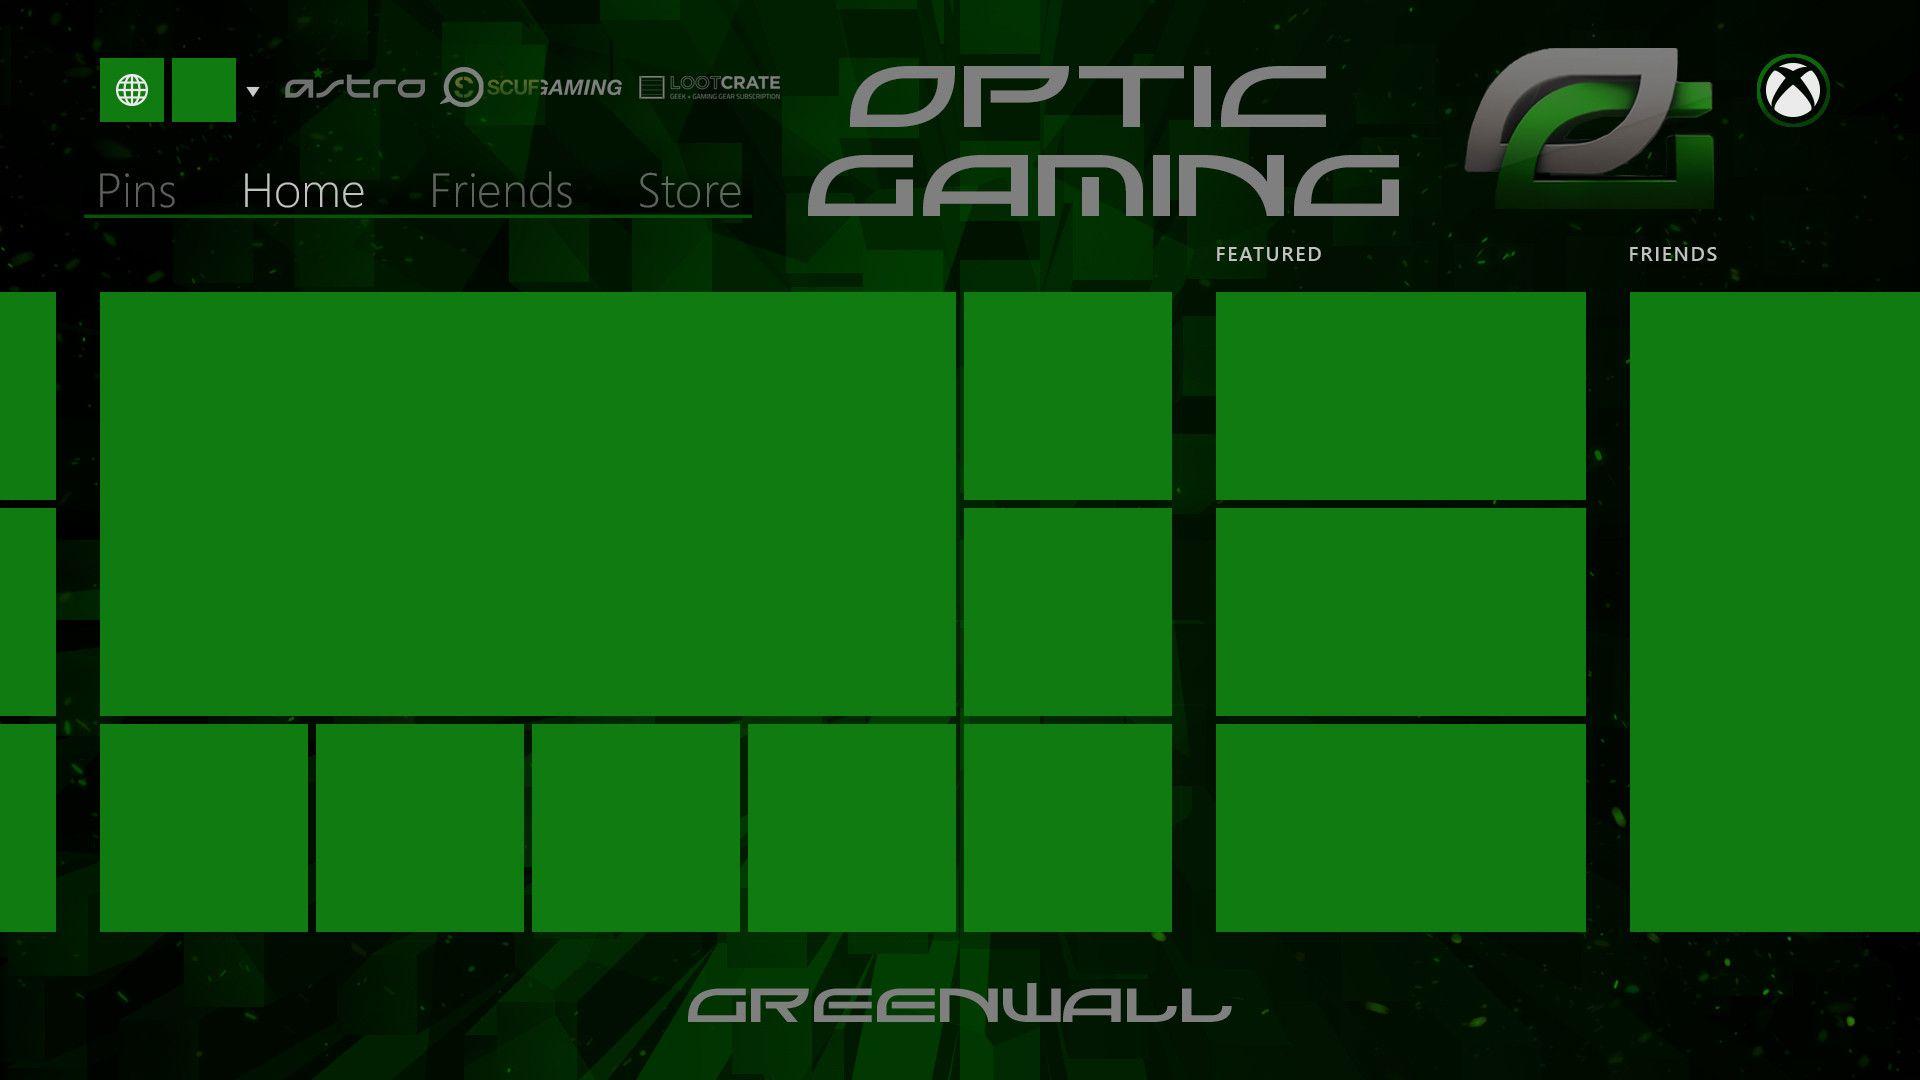 Xbox One dashboard background, OpTic style